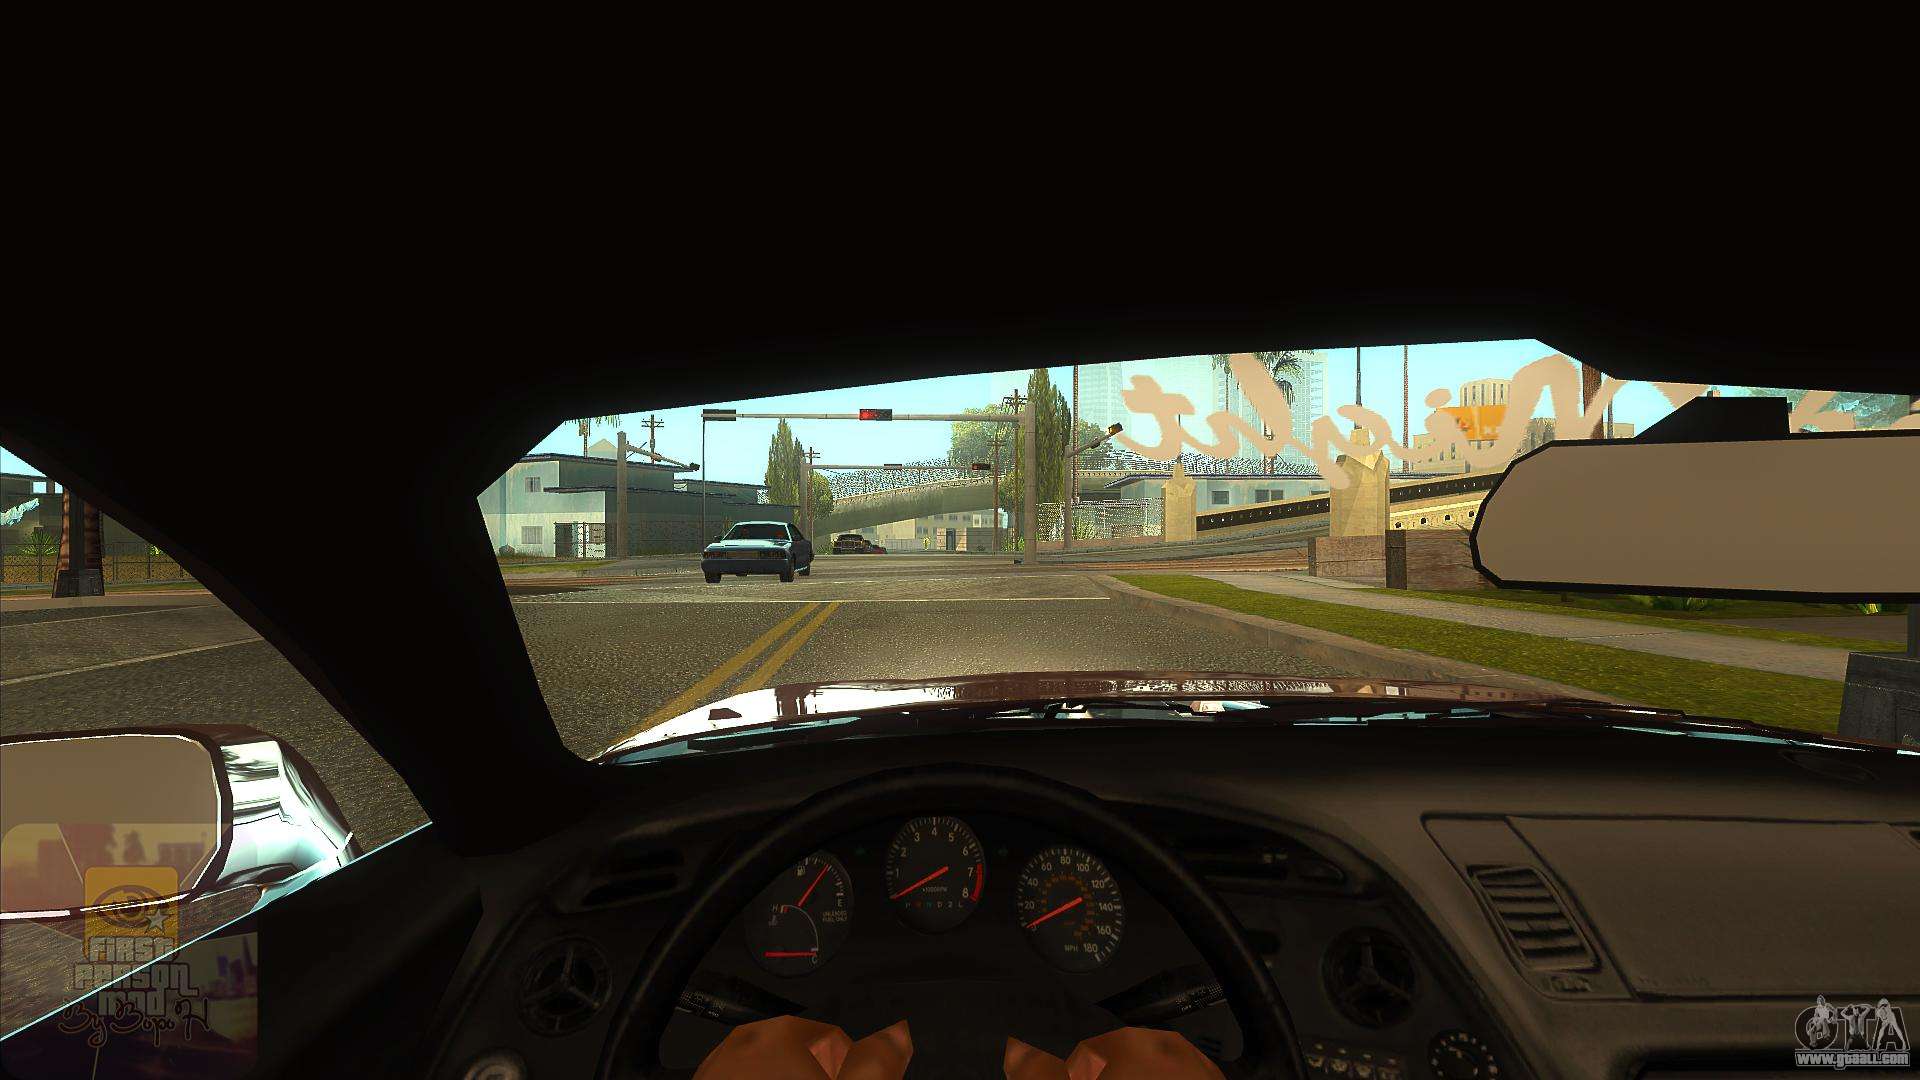 GTA V Xbox 360 Mod allows first person view